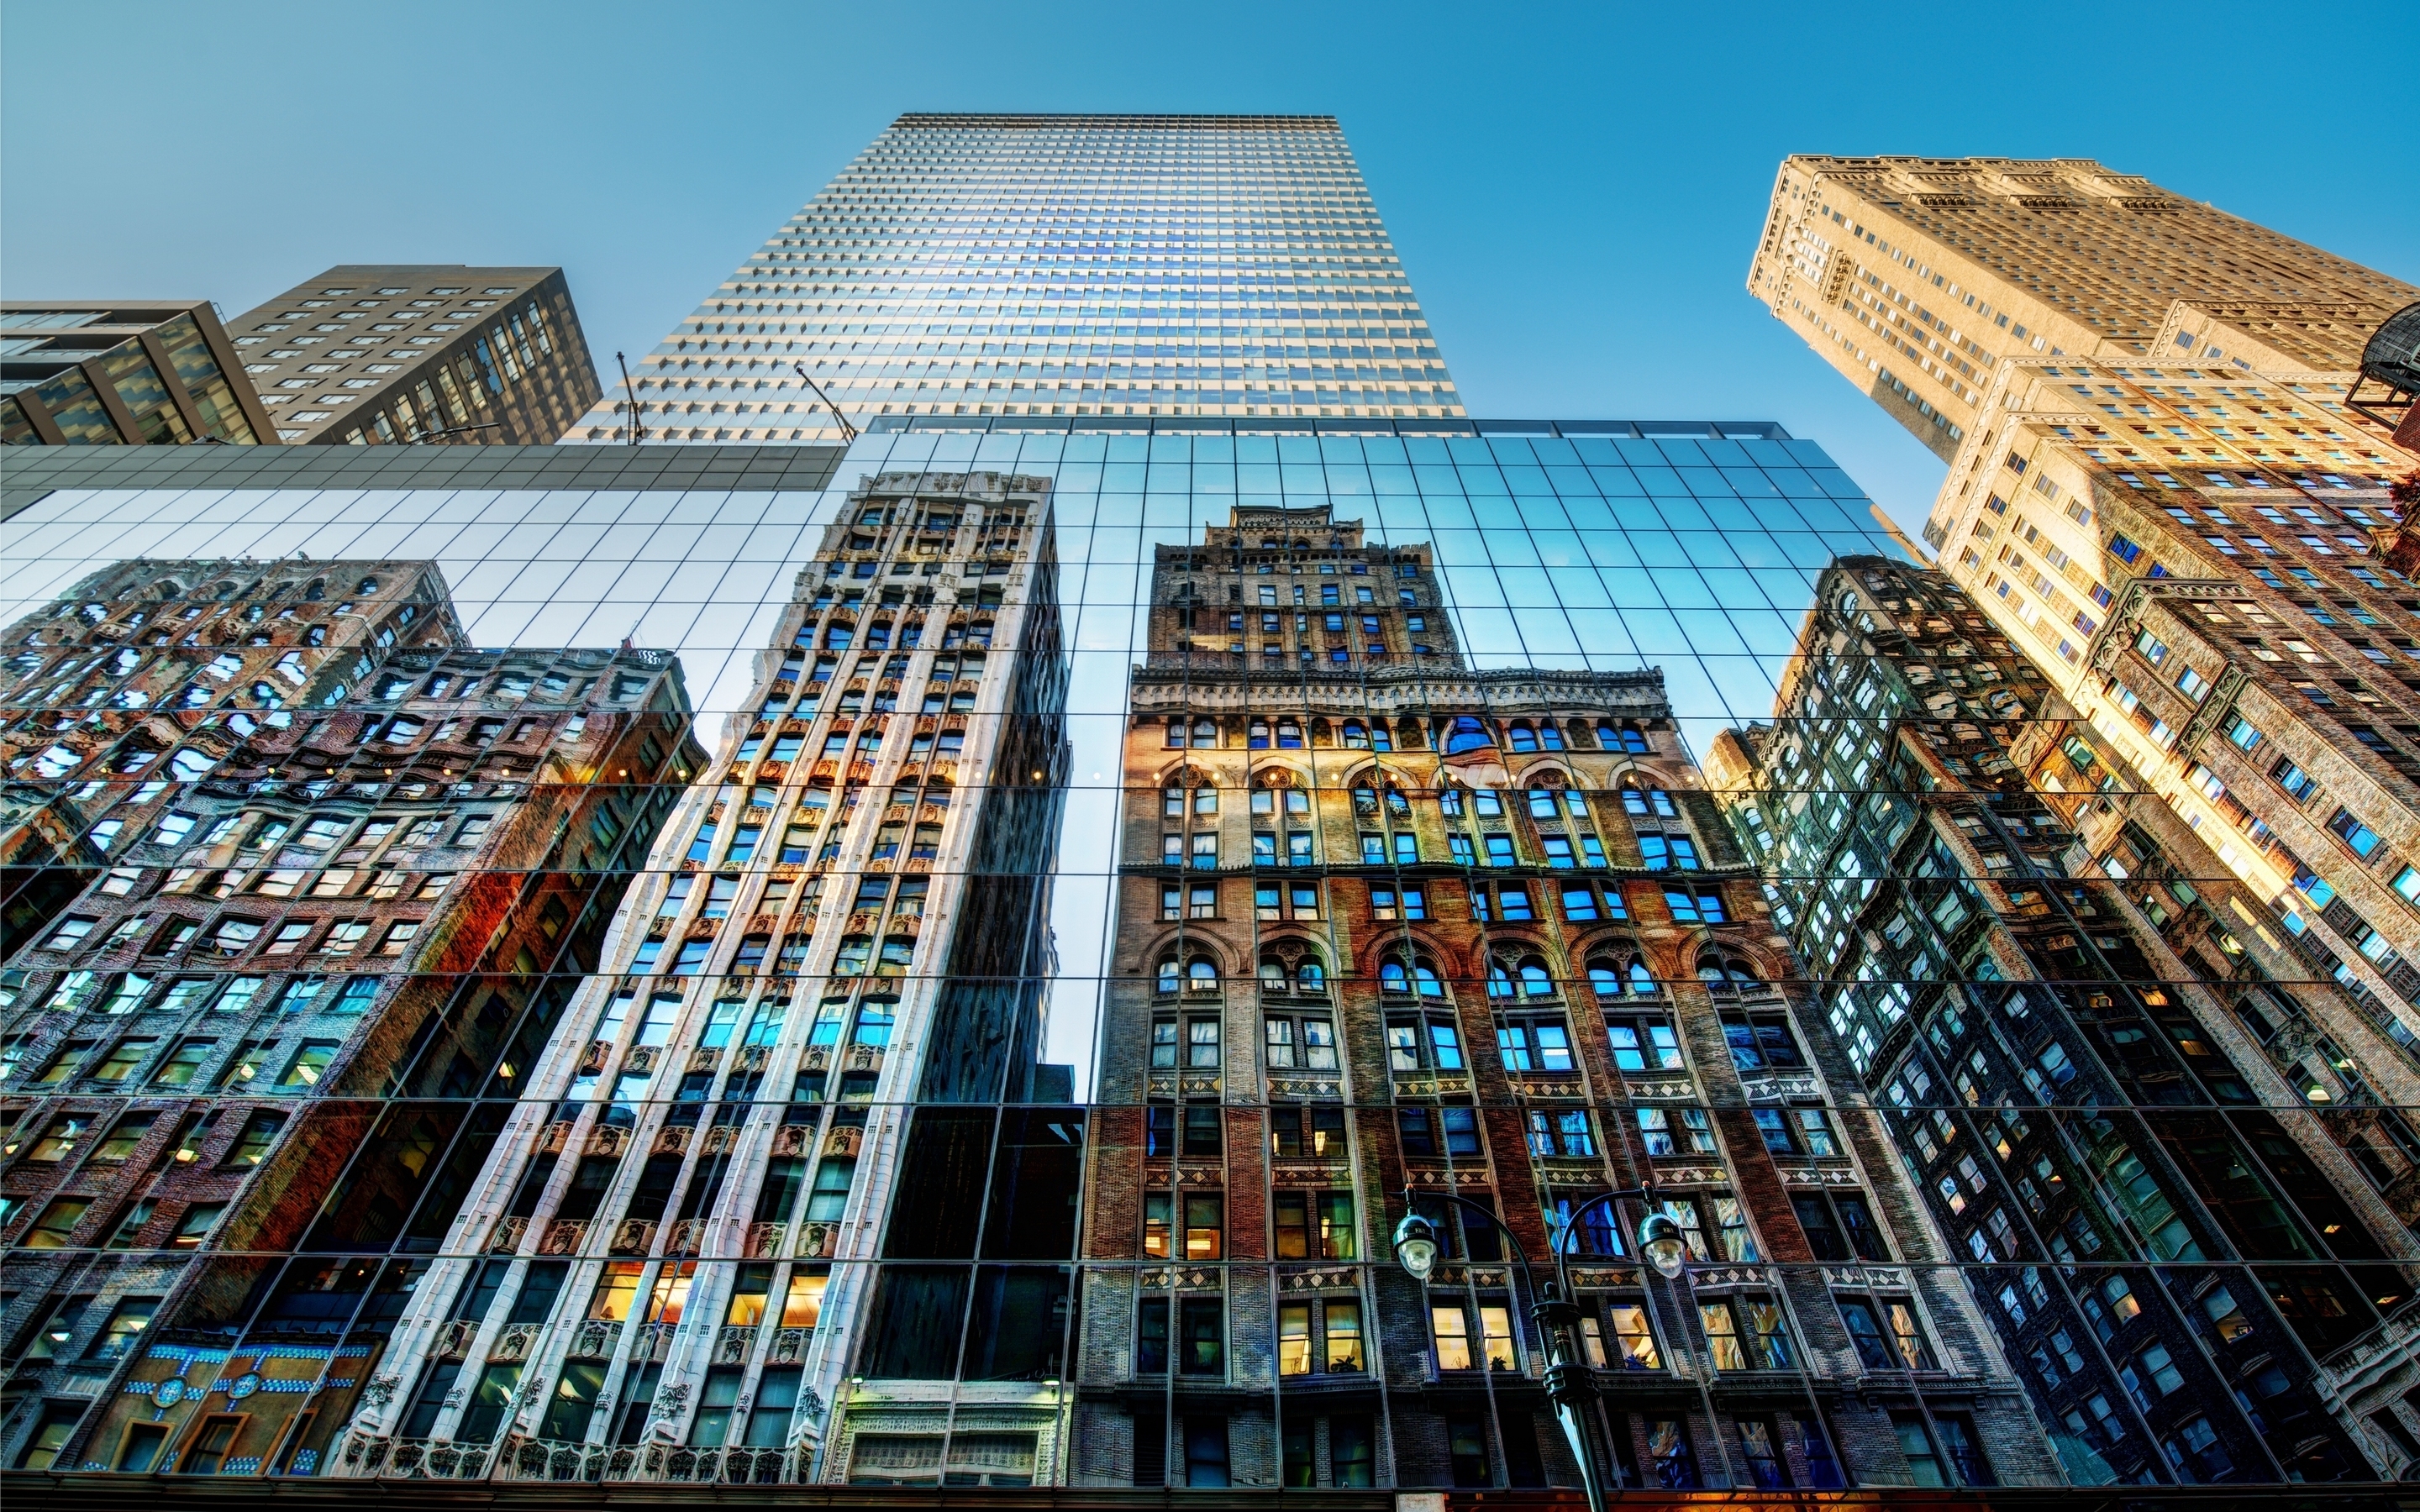 New York City Buildings for 2880 x 1800 Retina Display resolution